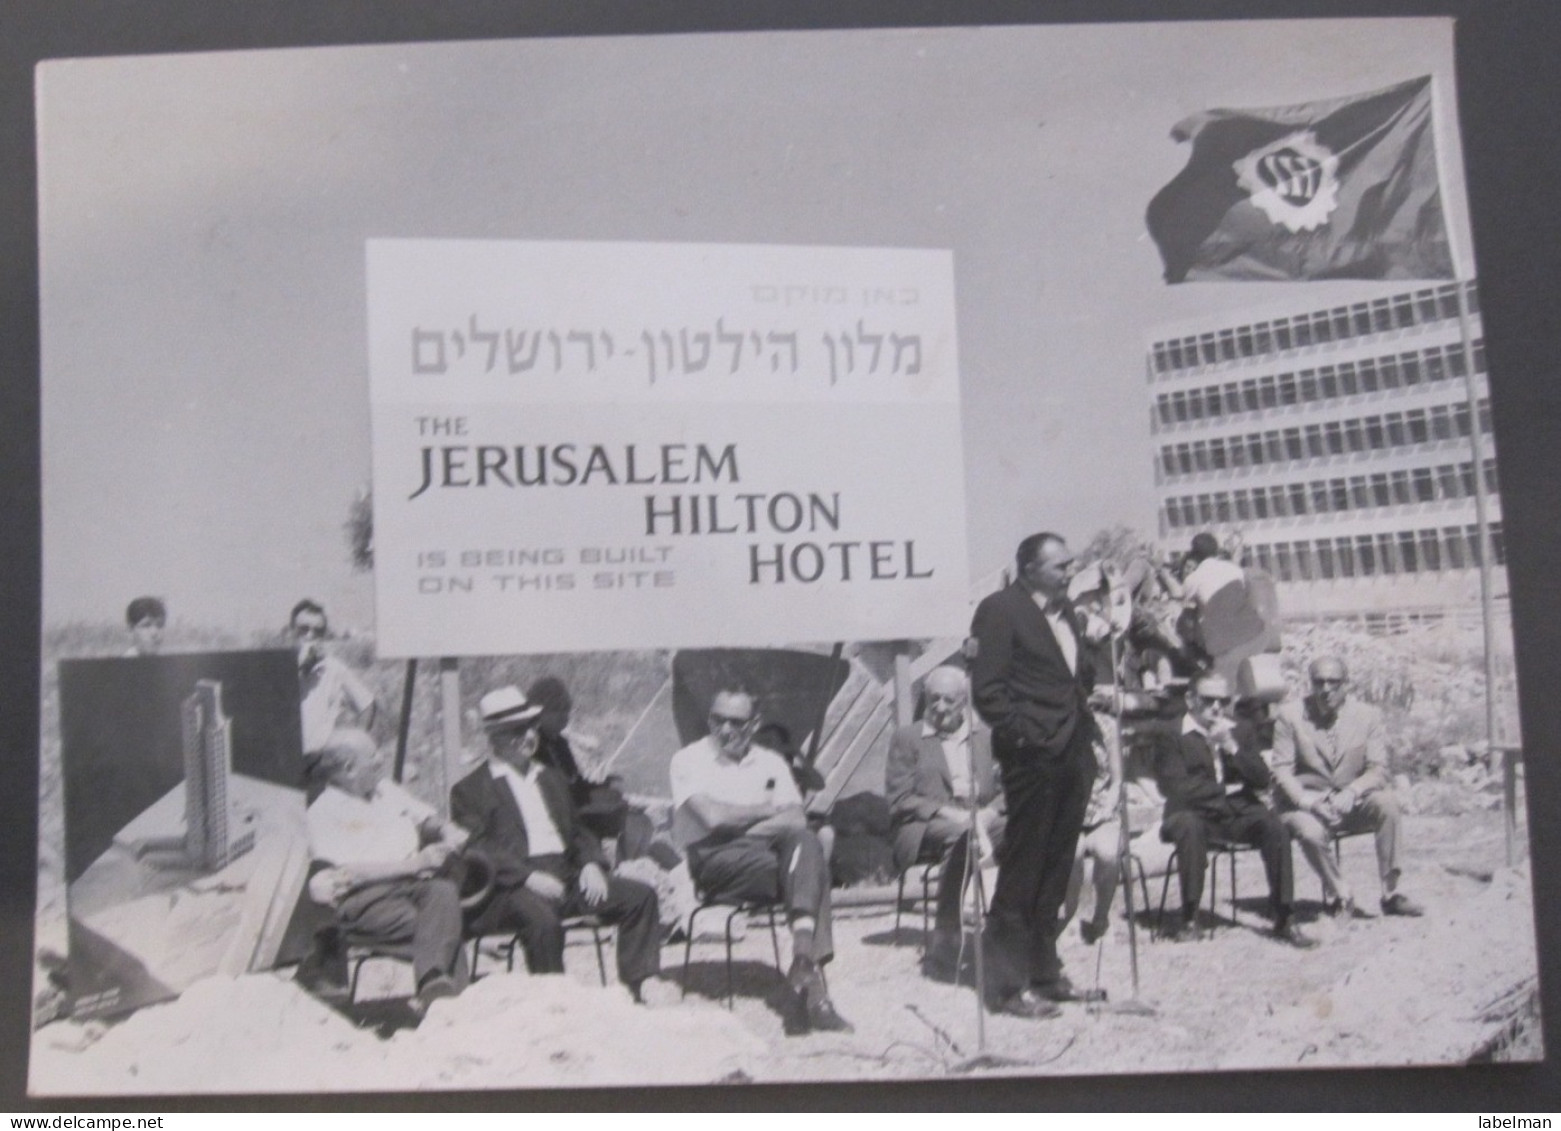 HOTEL HILTON JERUSALEM CORNER STONE CEREMONY ISRAEL CYRIL STEIN WORLD HOTELS 1970 REAL PHOTO TOURISM MIDDLE EAST - Non Classificati